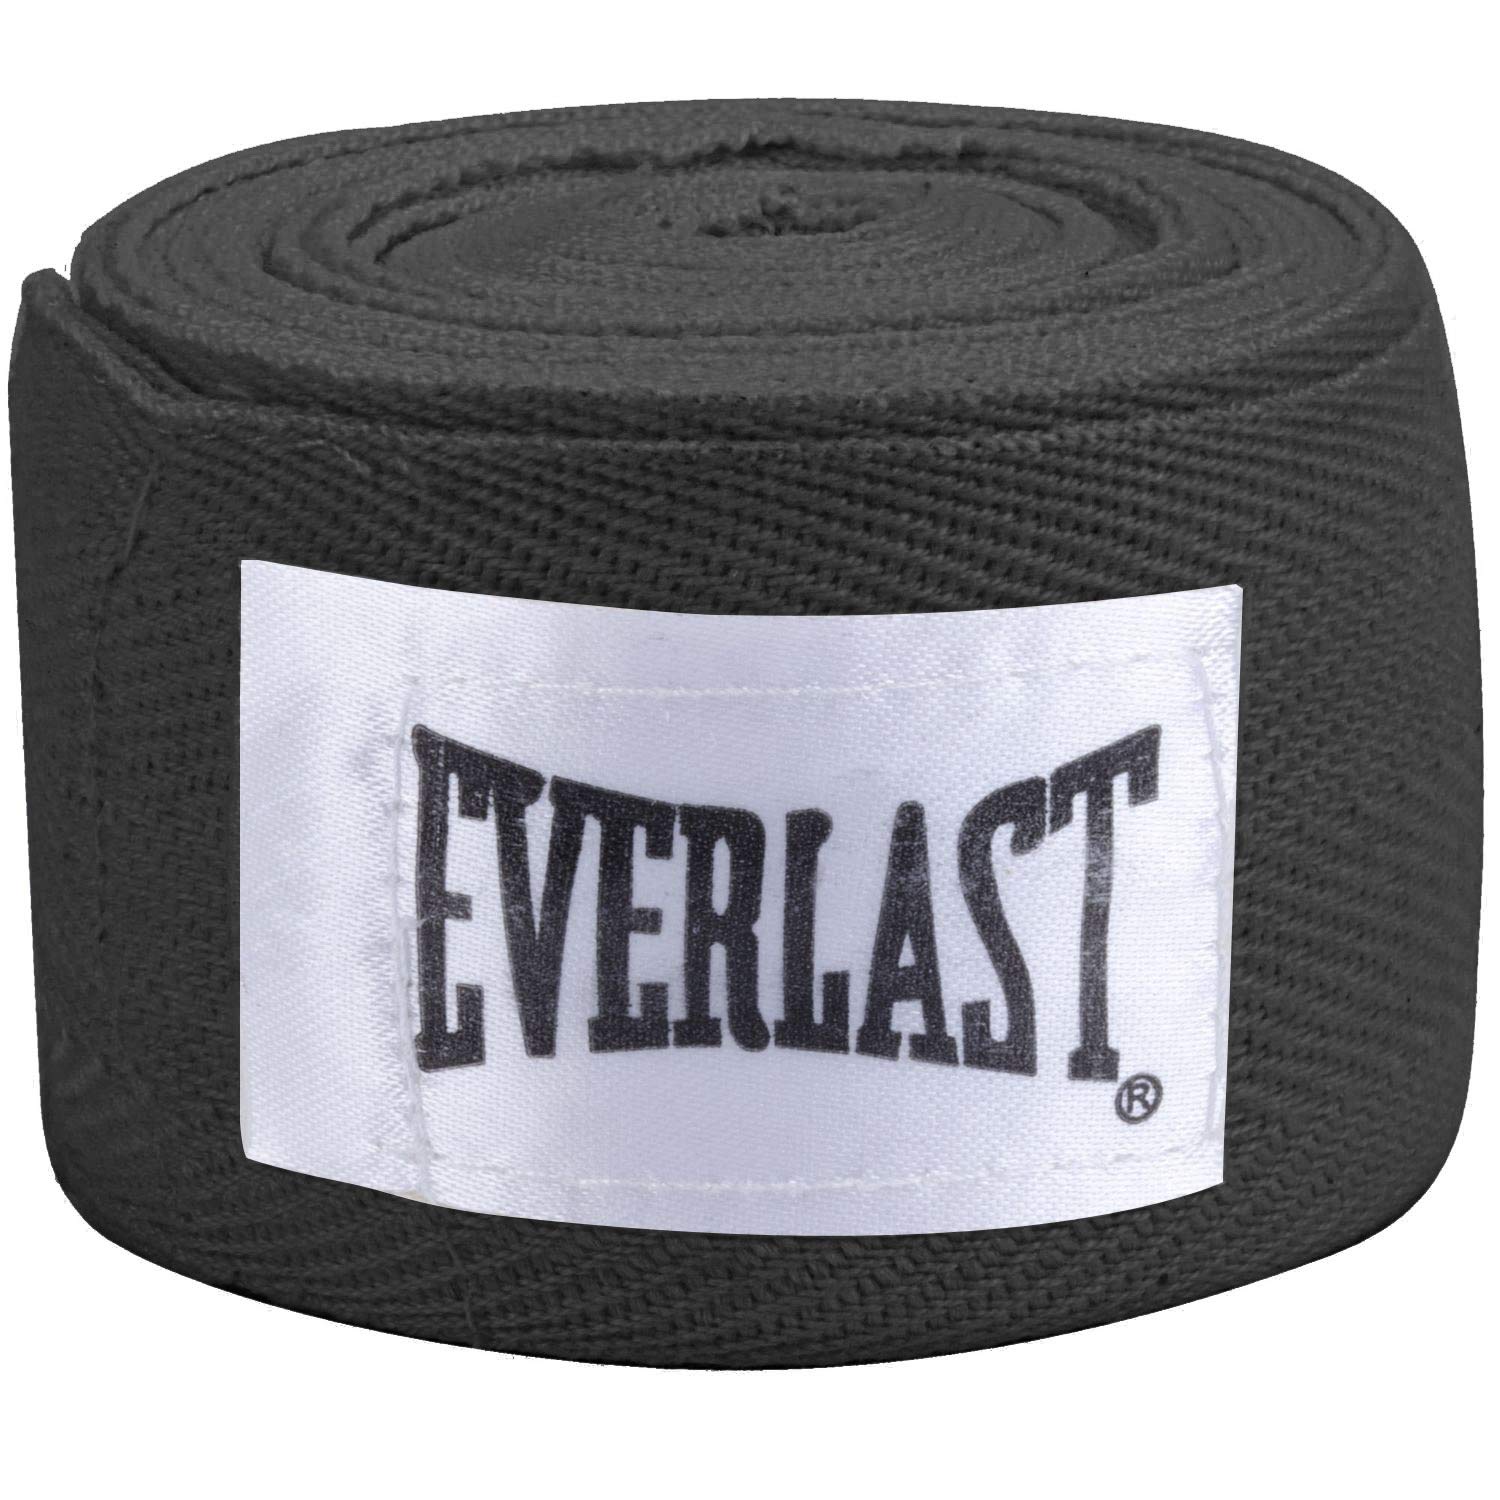 Everlast Boxing Hand Wraps (Multi-Colour, 120" (Pack of 3)) - Best Price online Prokicksports.com